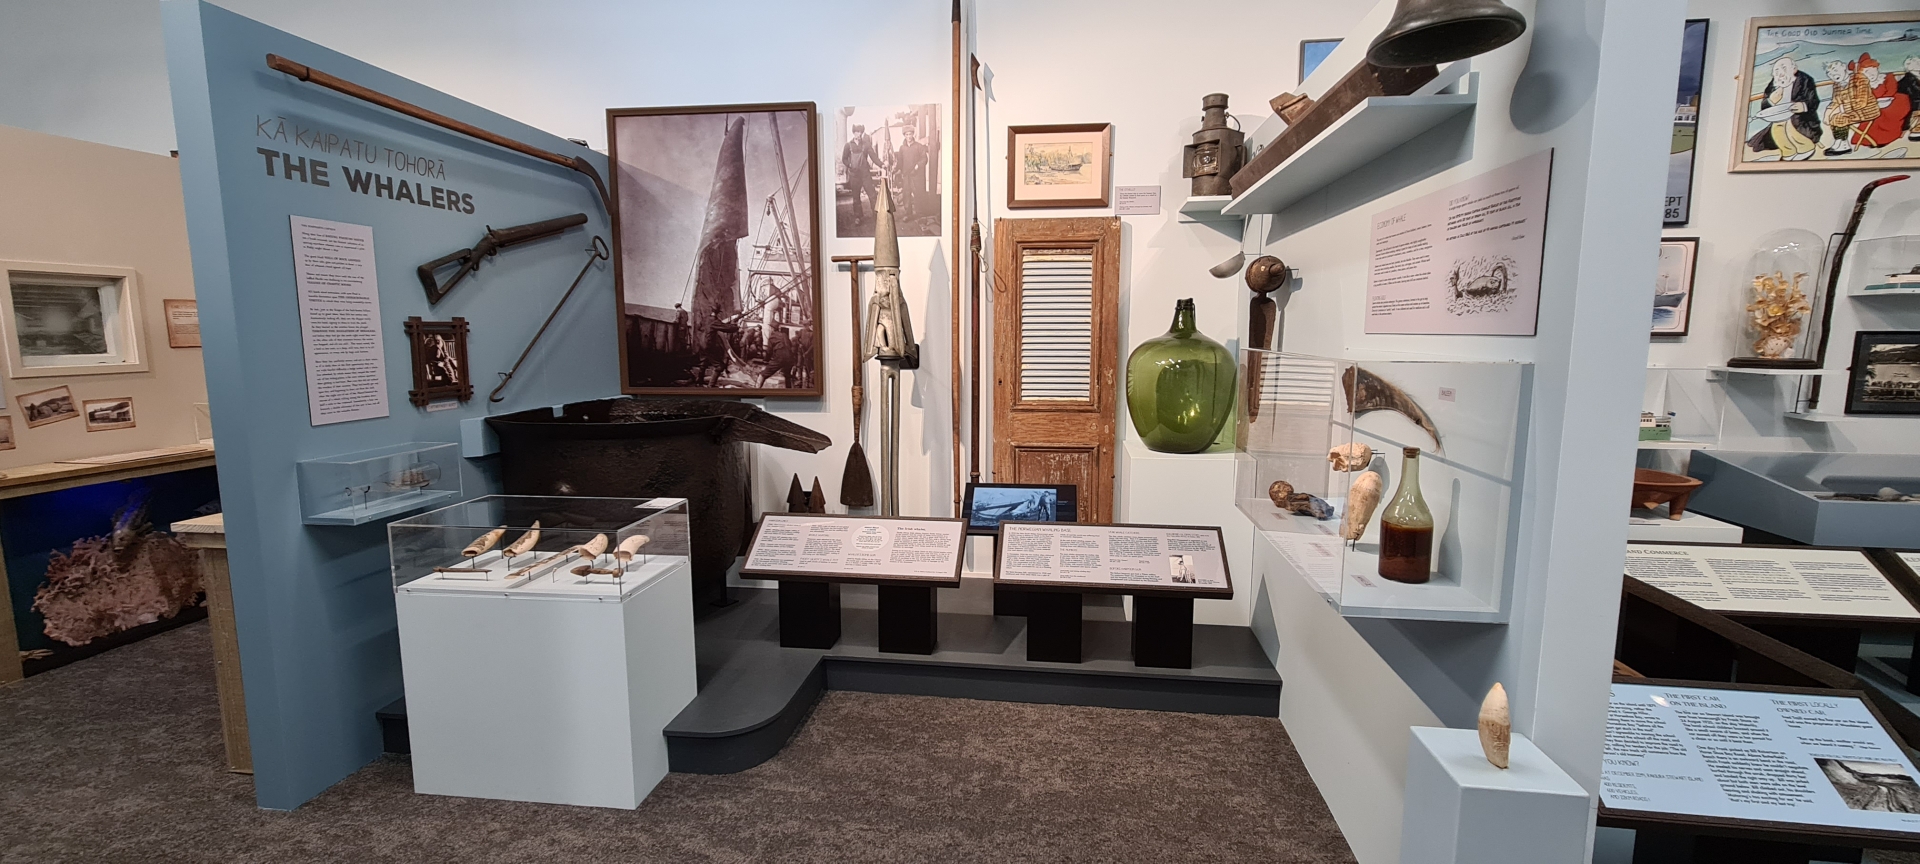 Whaling display at Rakiura Museum